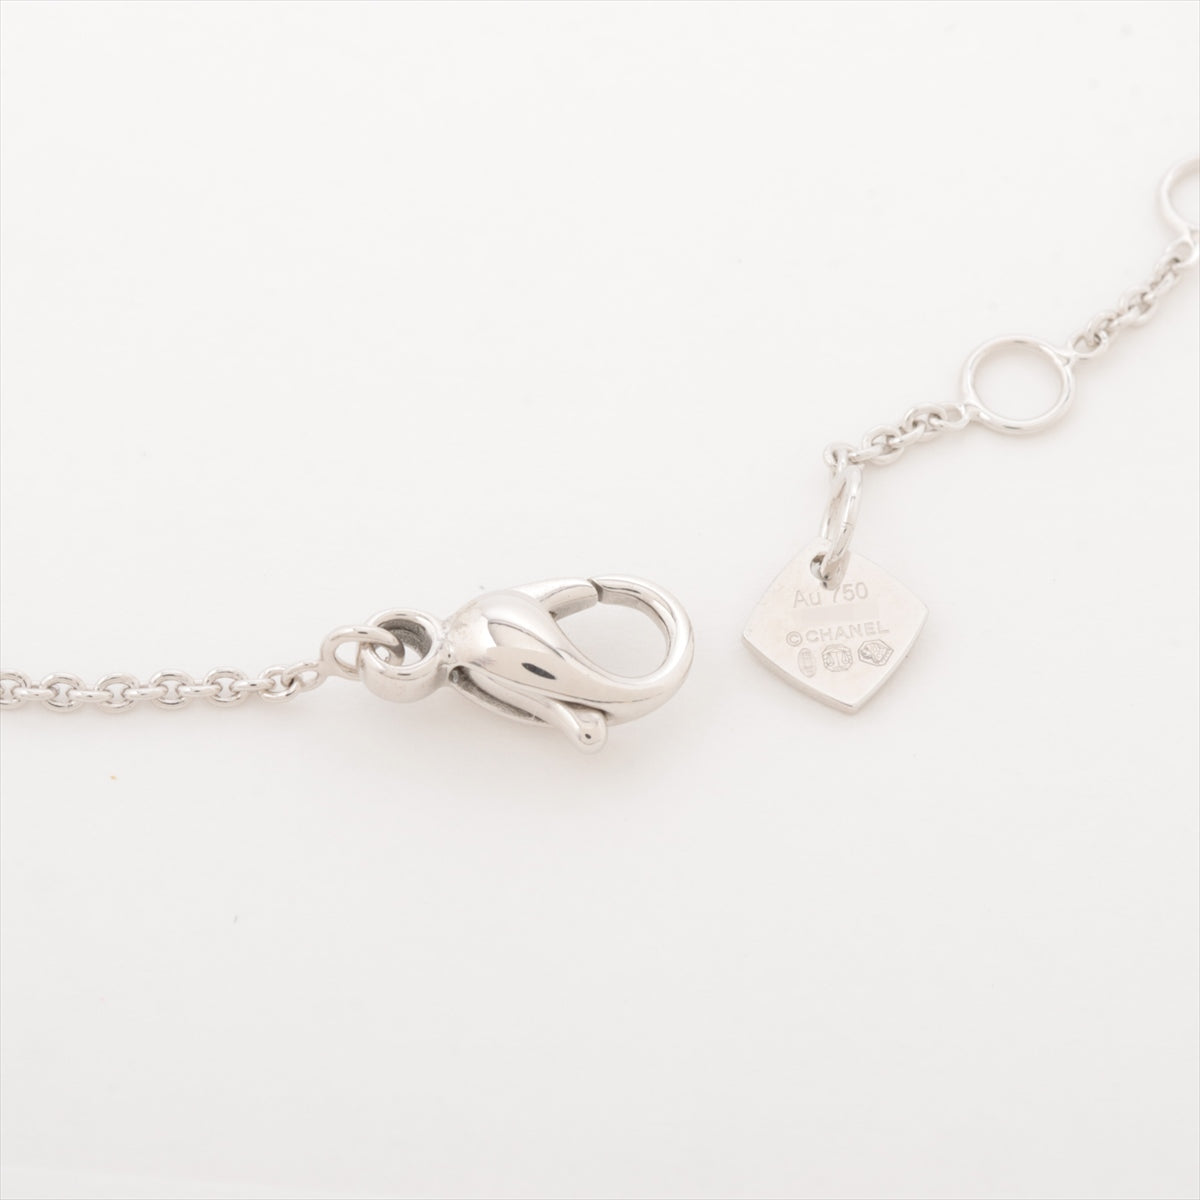 Chanel Coco Crush Bracelet 750(WG) 2.5g